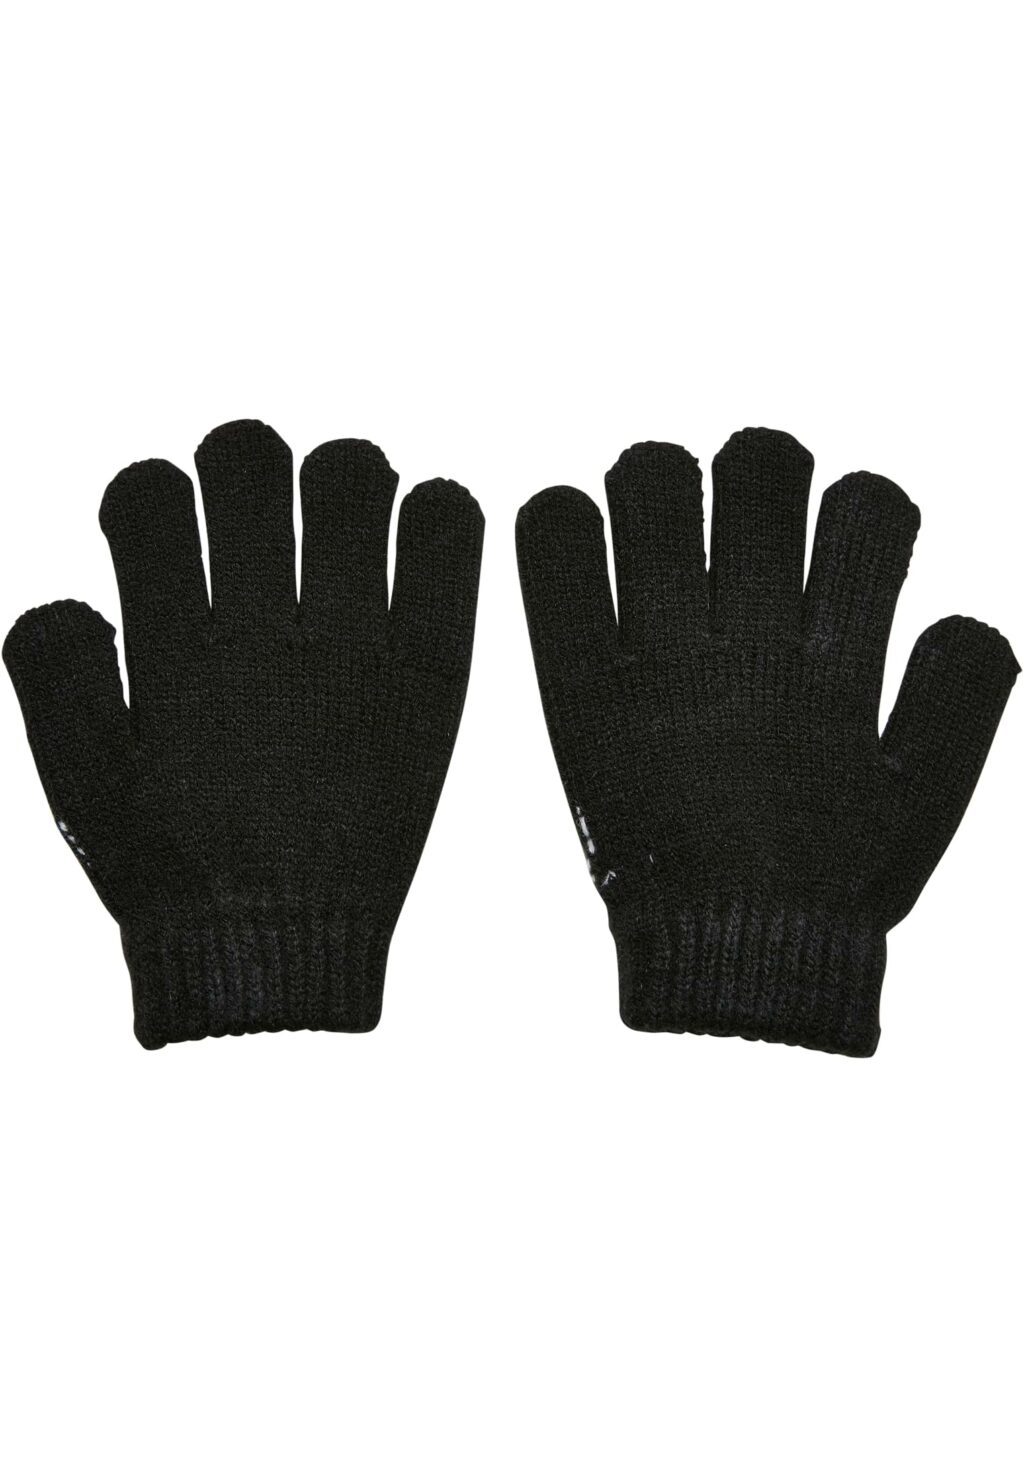 NASA Knit Glove Kids black MTK2093